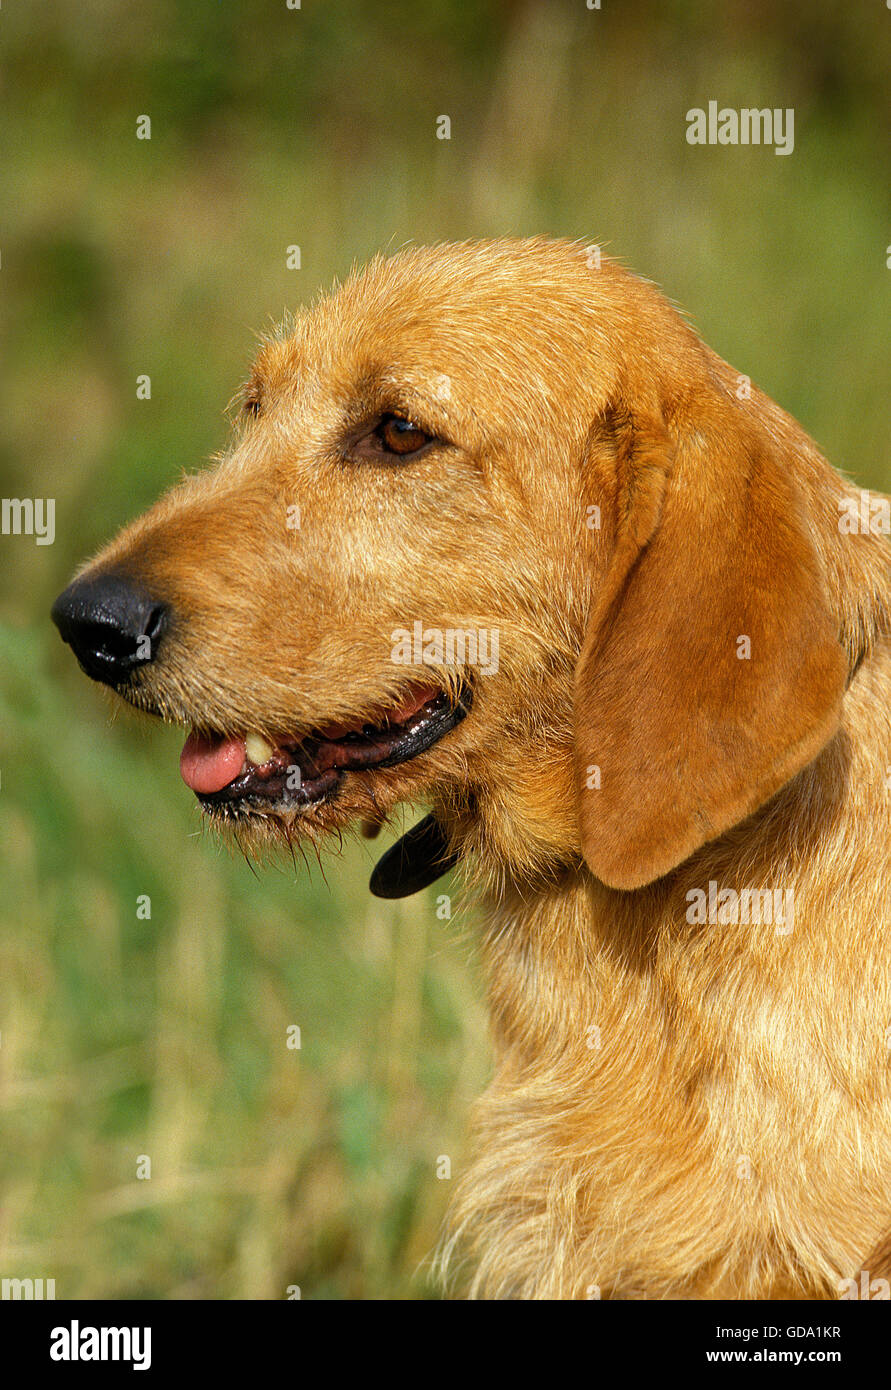 FAWN BRITTANY GRIFFON OR GRIFFON FAUVE DE BRETAGNE DOG, PORTRAIT OF ADULT Stock Photo